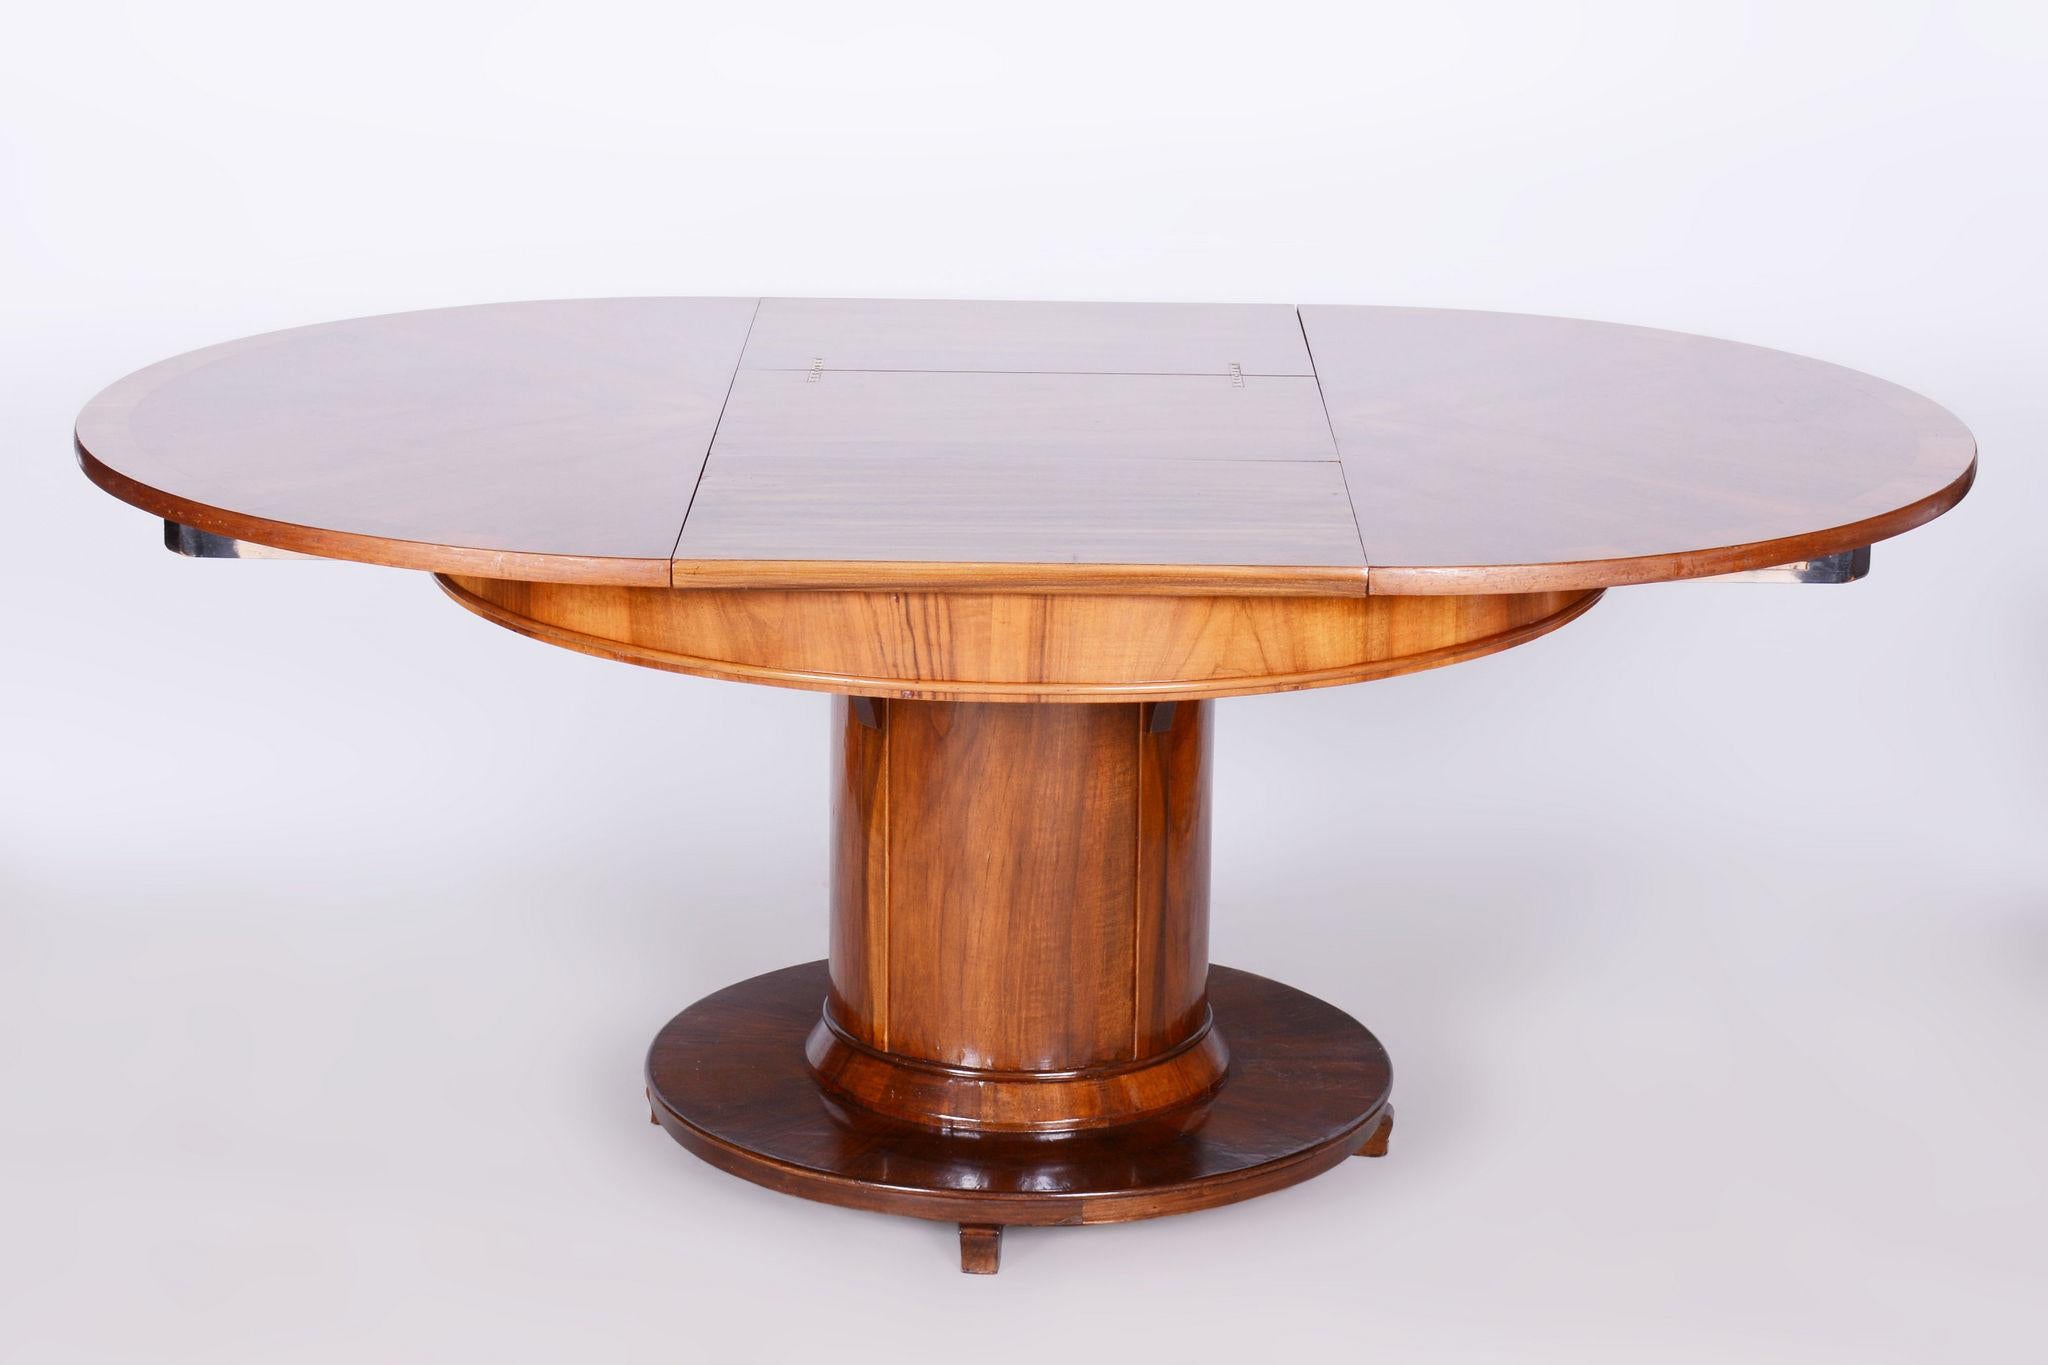 Restored Art Deco Folding Dining Table, Walnut, Spruce, Czech, 1920s For Sale 3